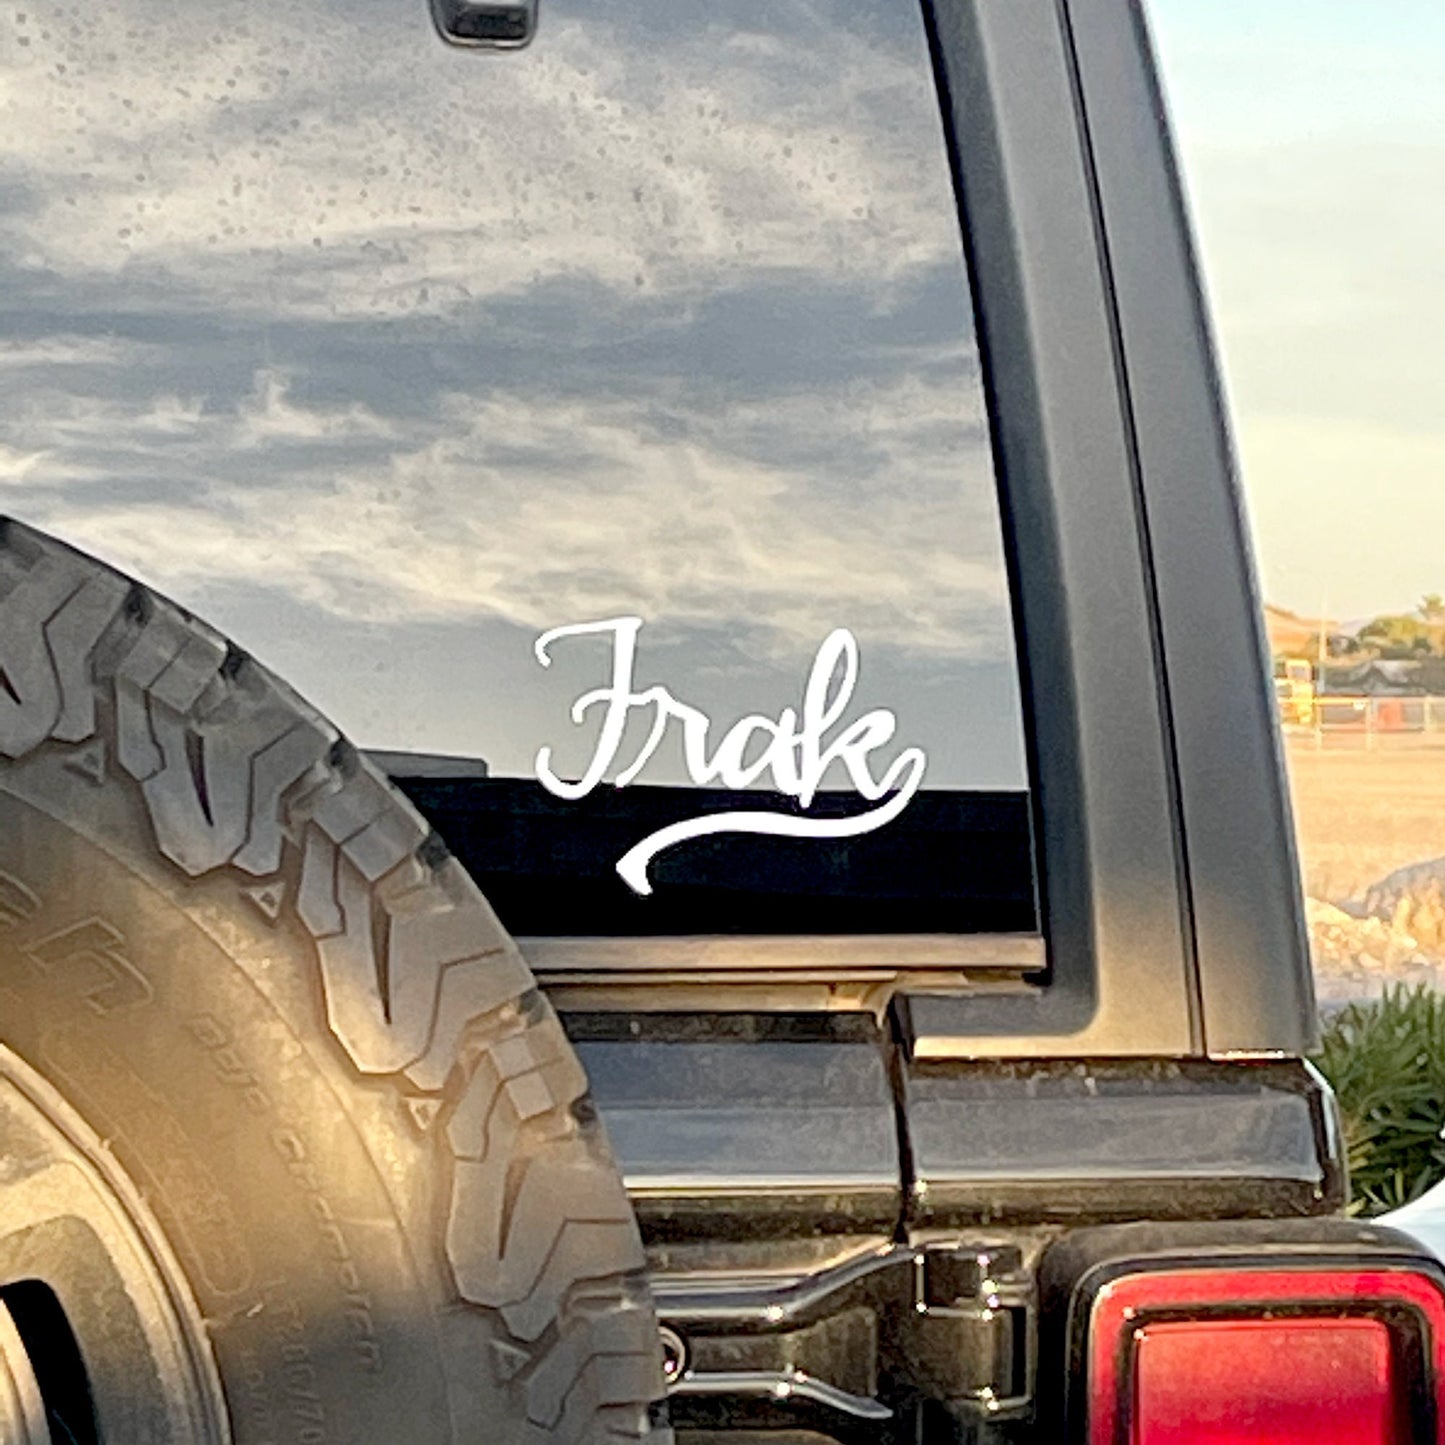 Frak Calligraphy Geek Vinyl Decal on Jeep